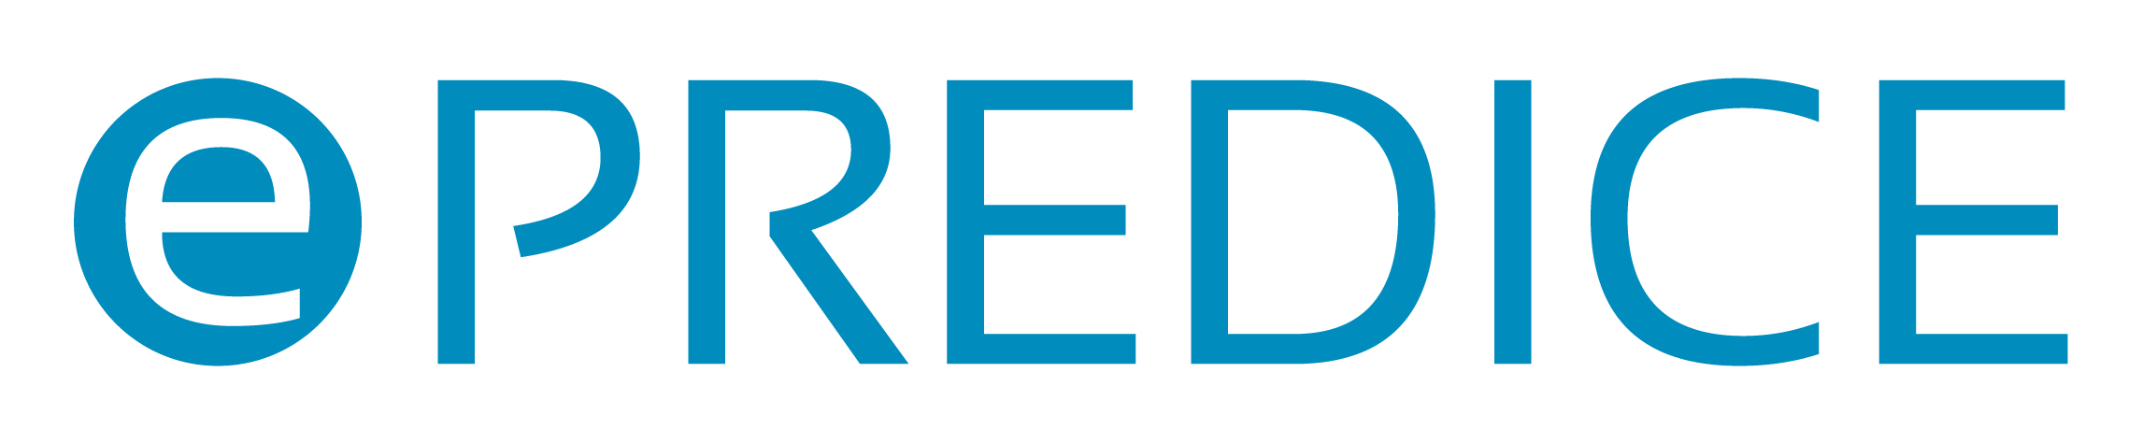 Epredice Logo